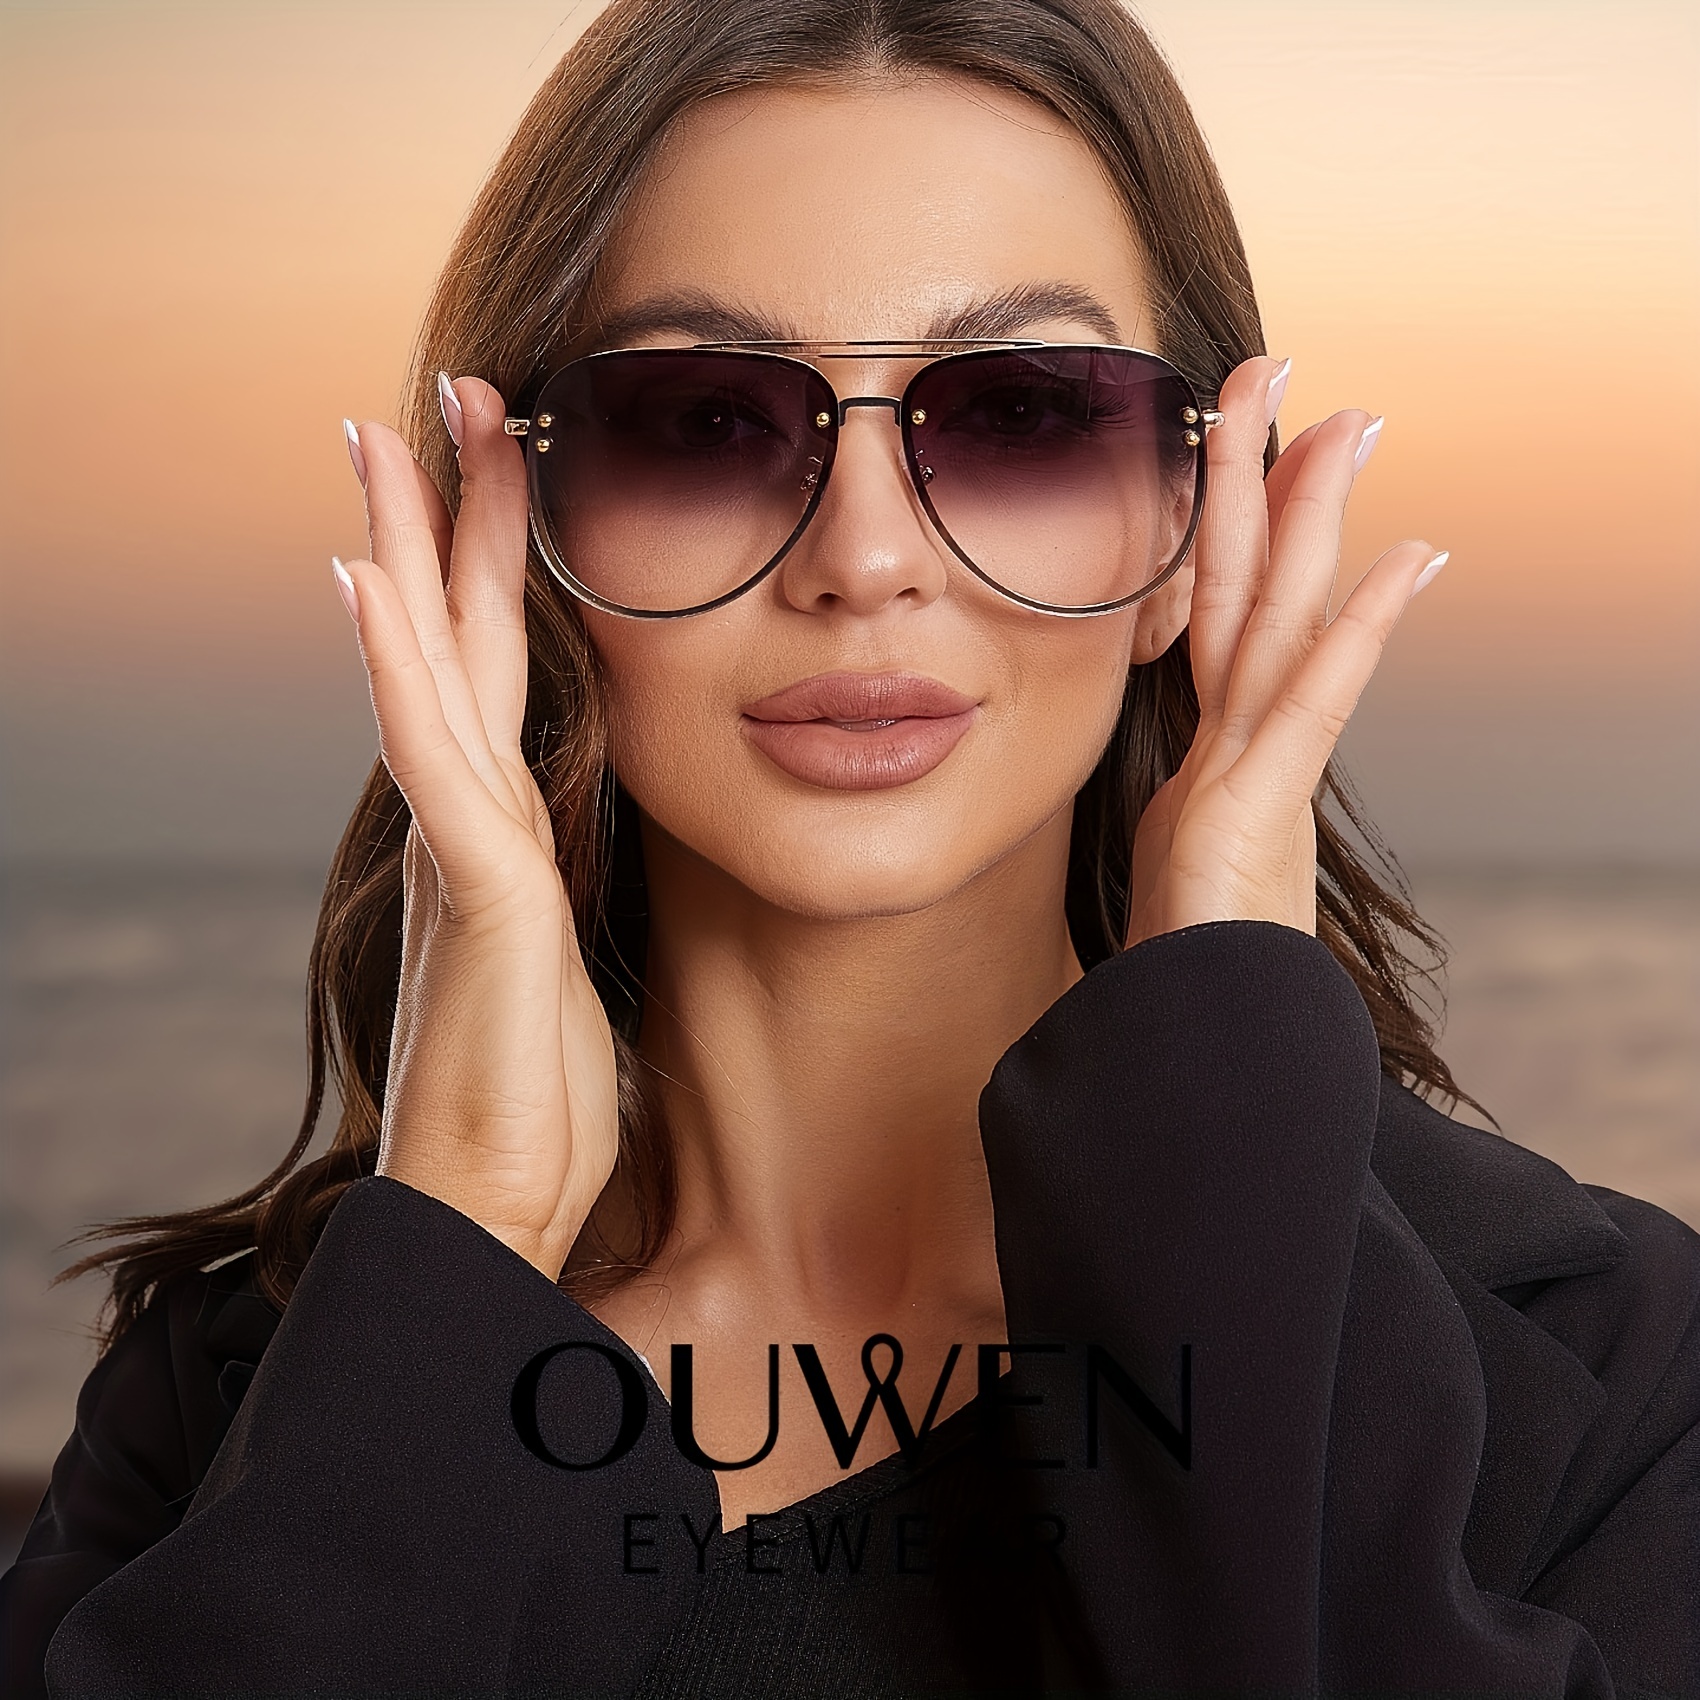 OUWEN Premium Oversized Polarized Women Men Sunglasses, Black Large Aviator Sunglasses Lentes de Sol Muje 87247 Sun Glasses,Goggles Sunglasses,Y2k